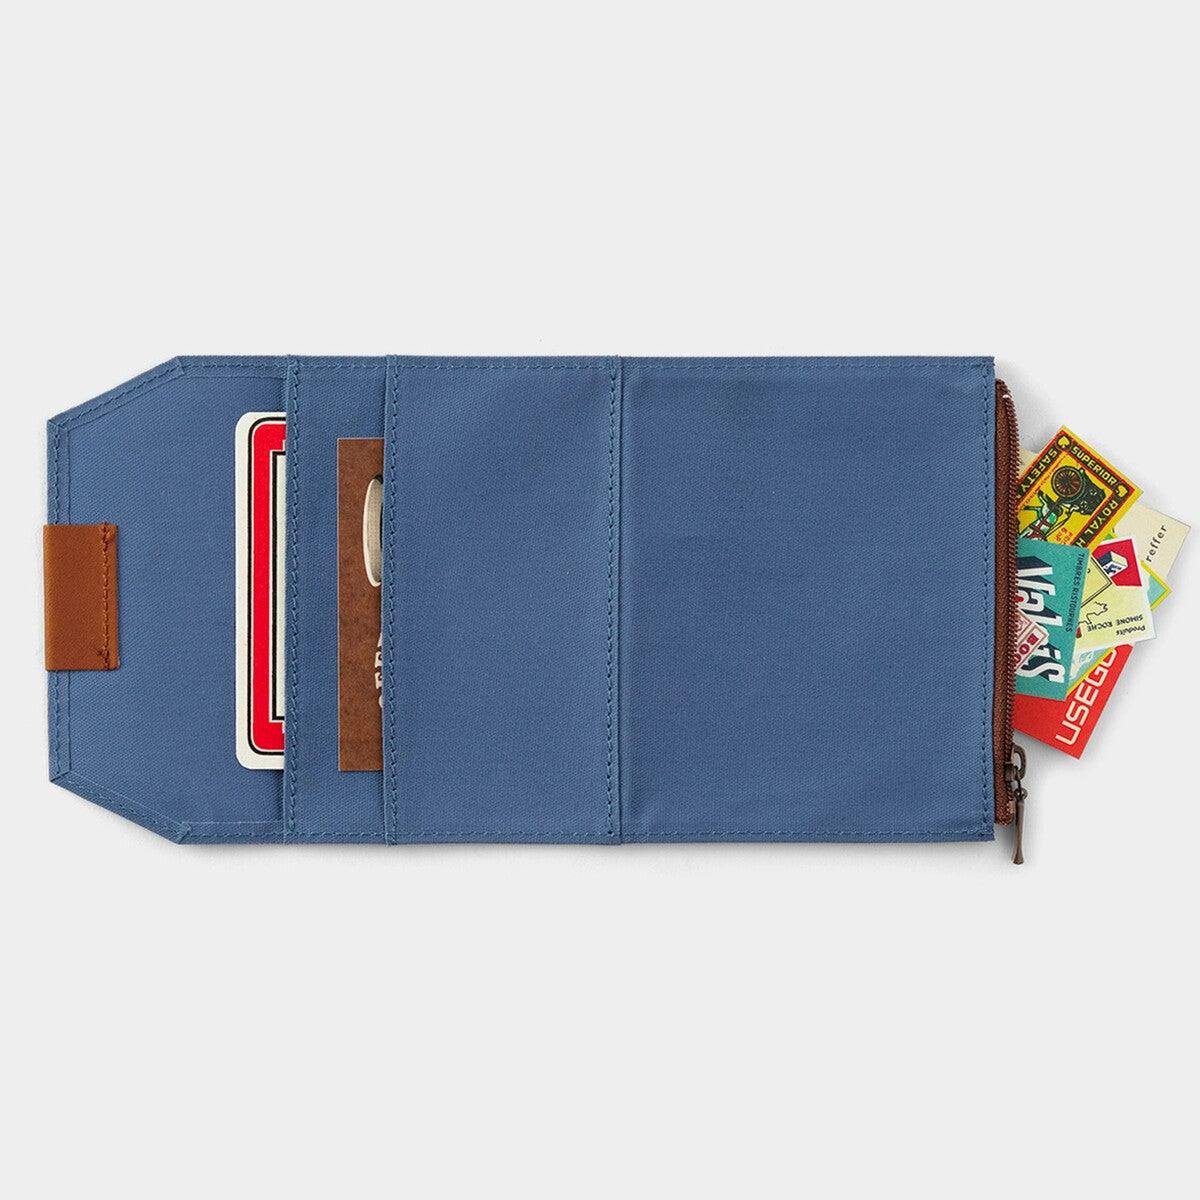 Traveler's Notebook B-Sides & Rarities Cotton Zipper Case Passport Size Blu Edizione Limitata - Todo Modo